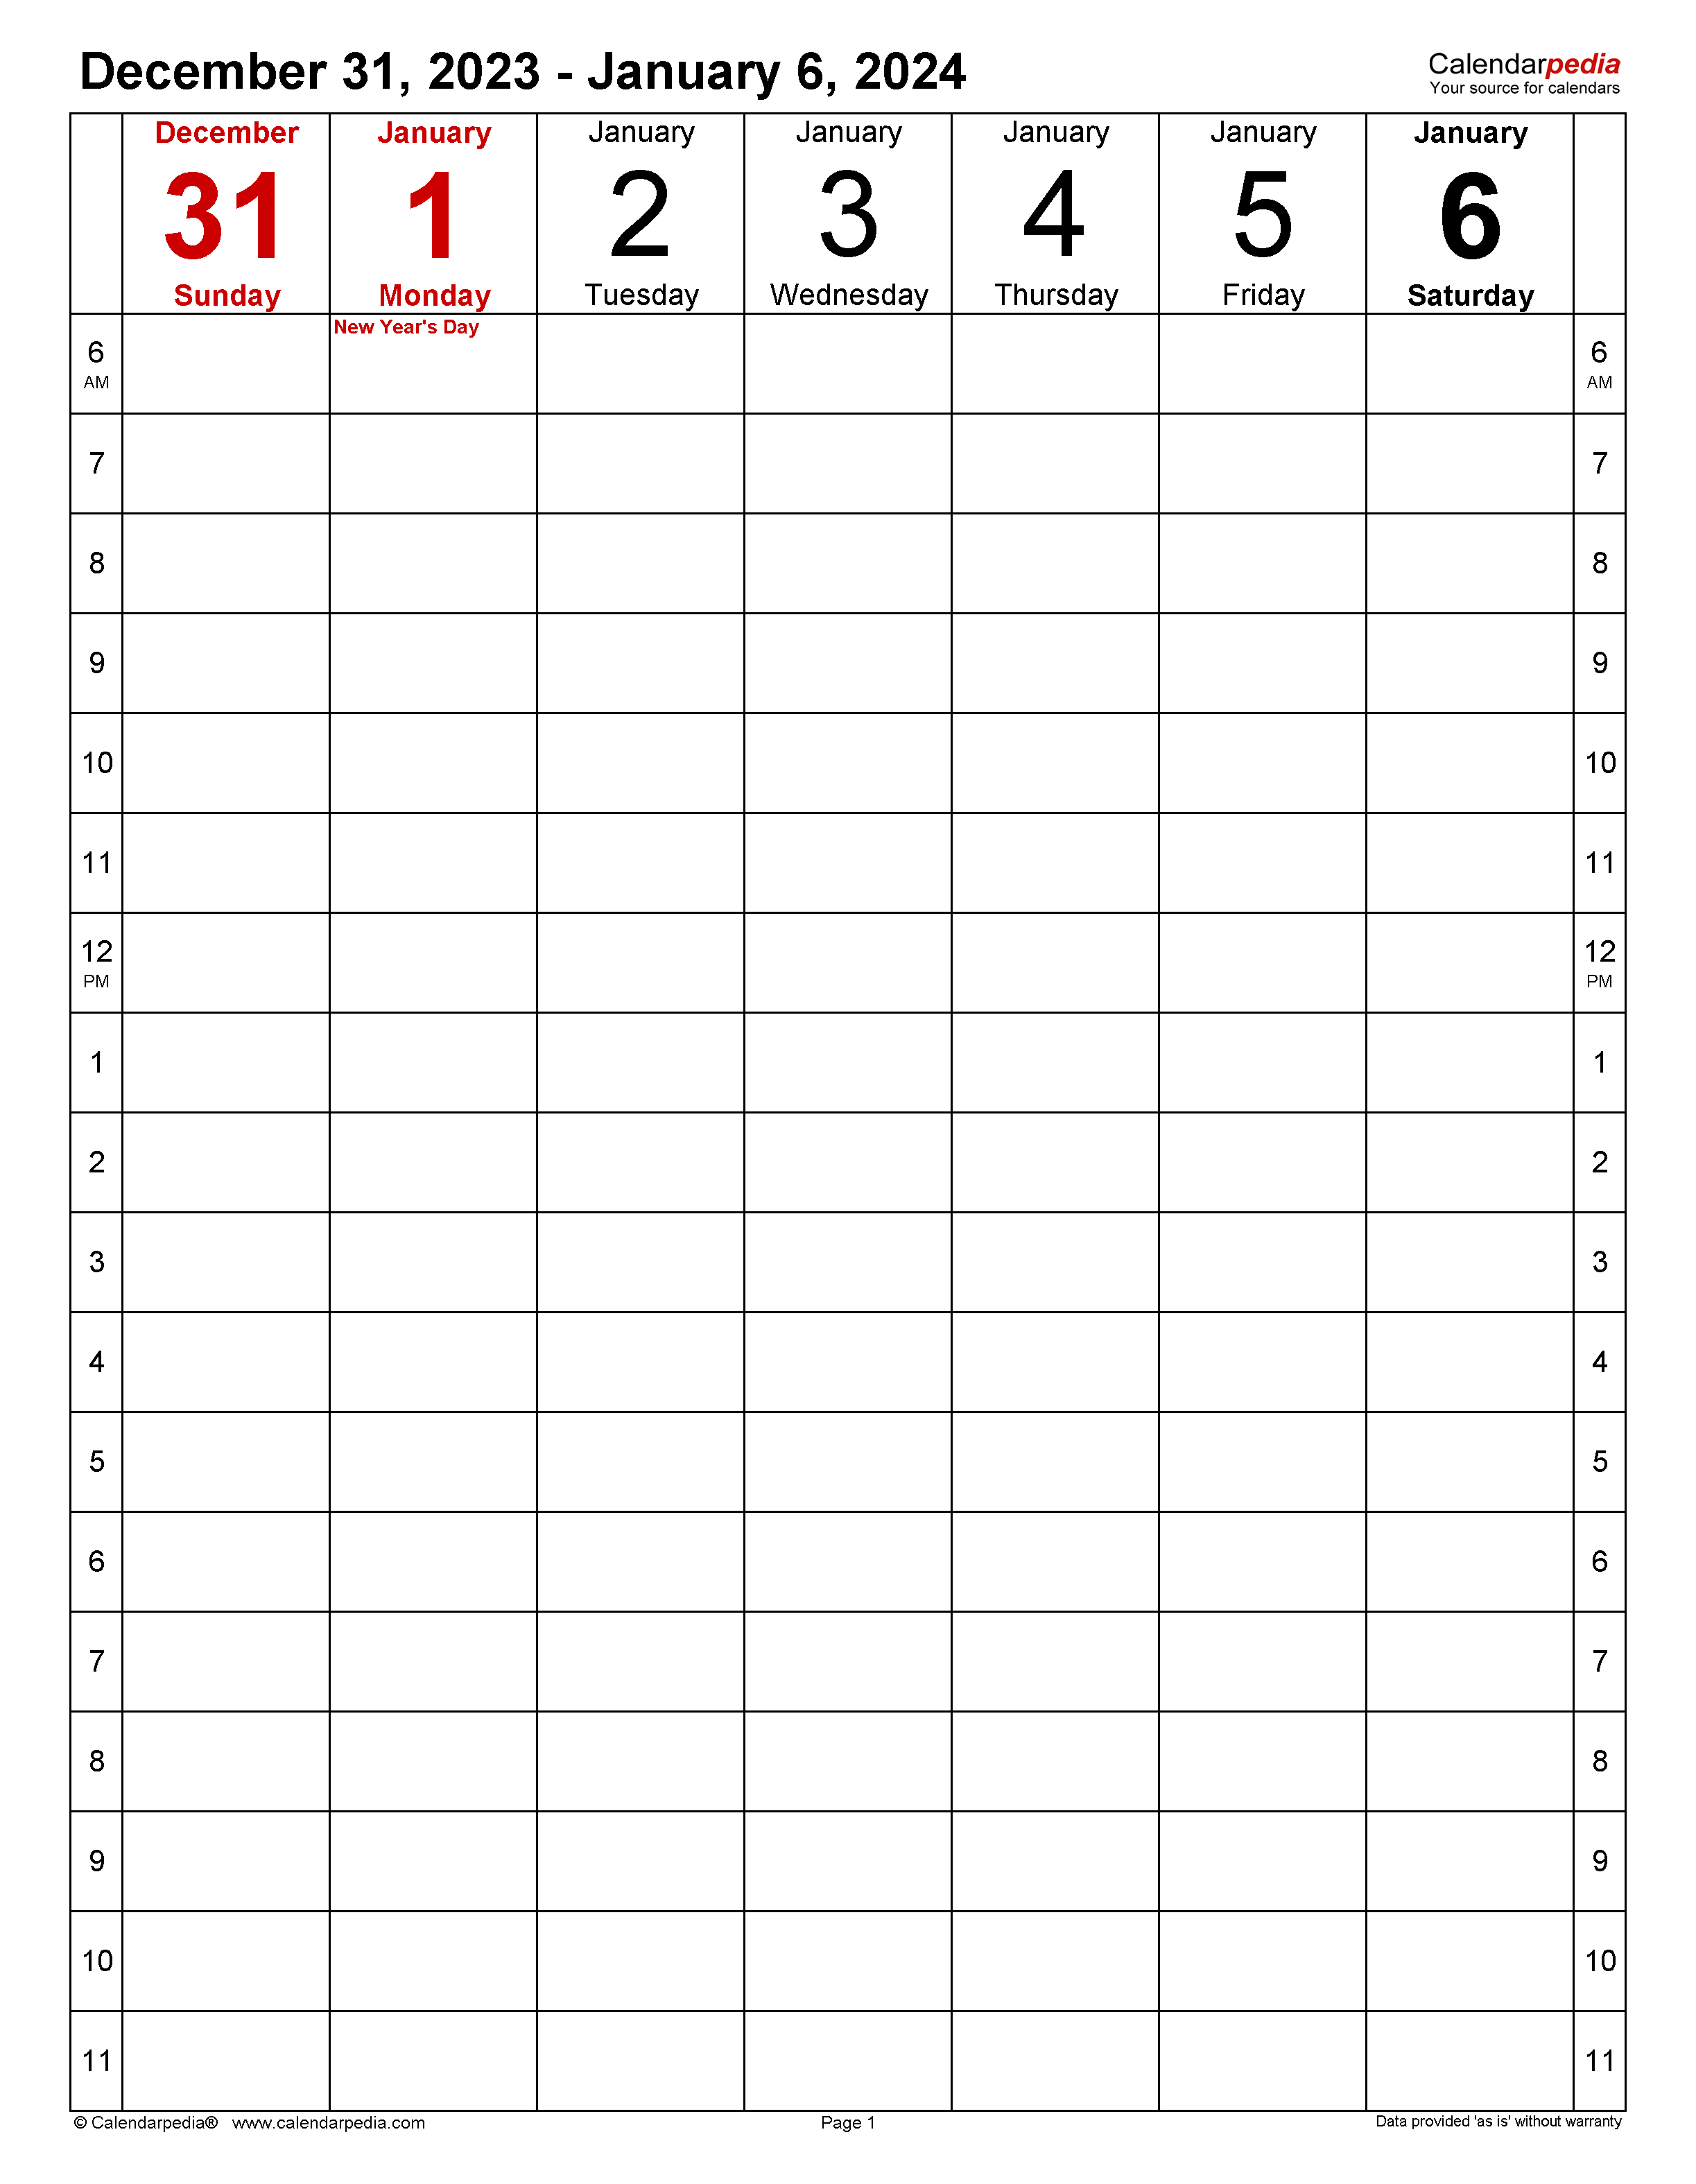 Weekly Calendars 2024 For Pdf - 12 Free Printable Templates for Weekly Printable Calendar 2024